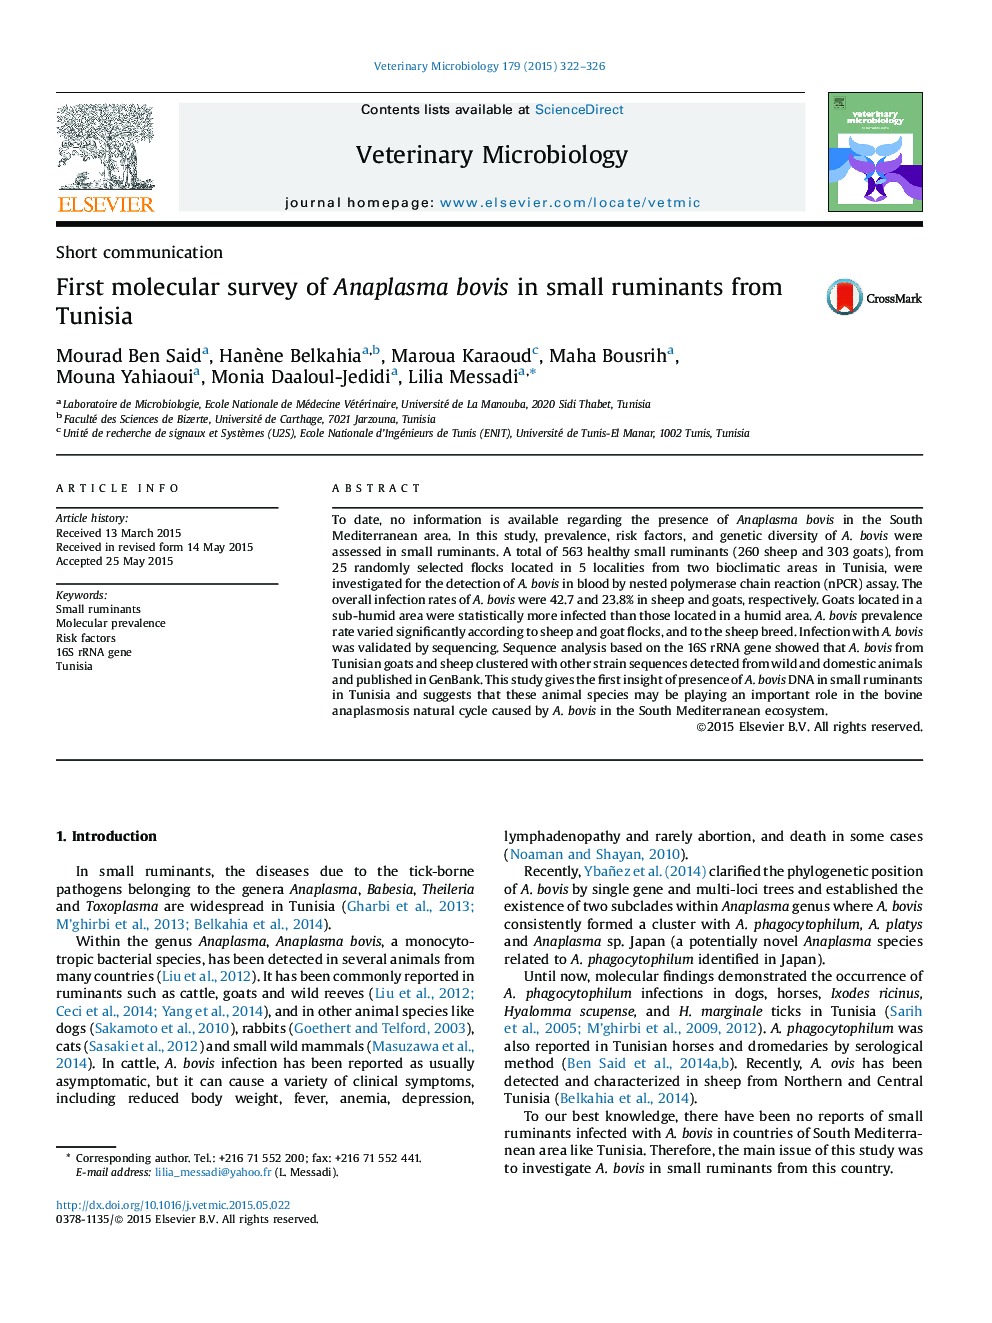 First molecular survey of Anaplasma bovis in small ruminants from Tunisia